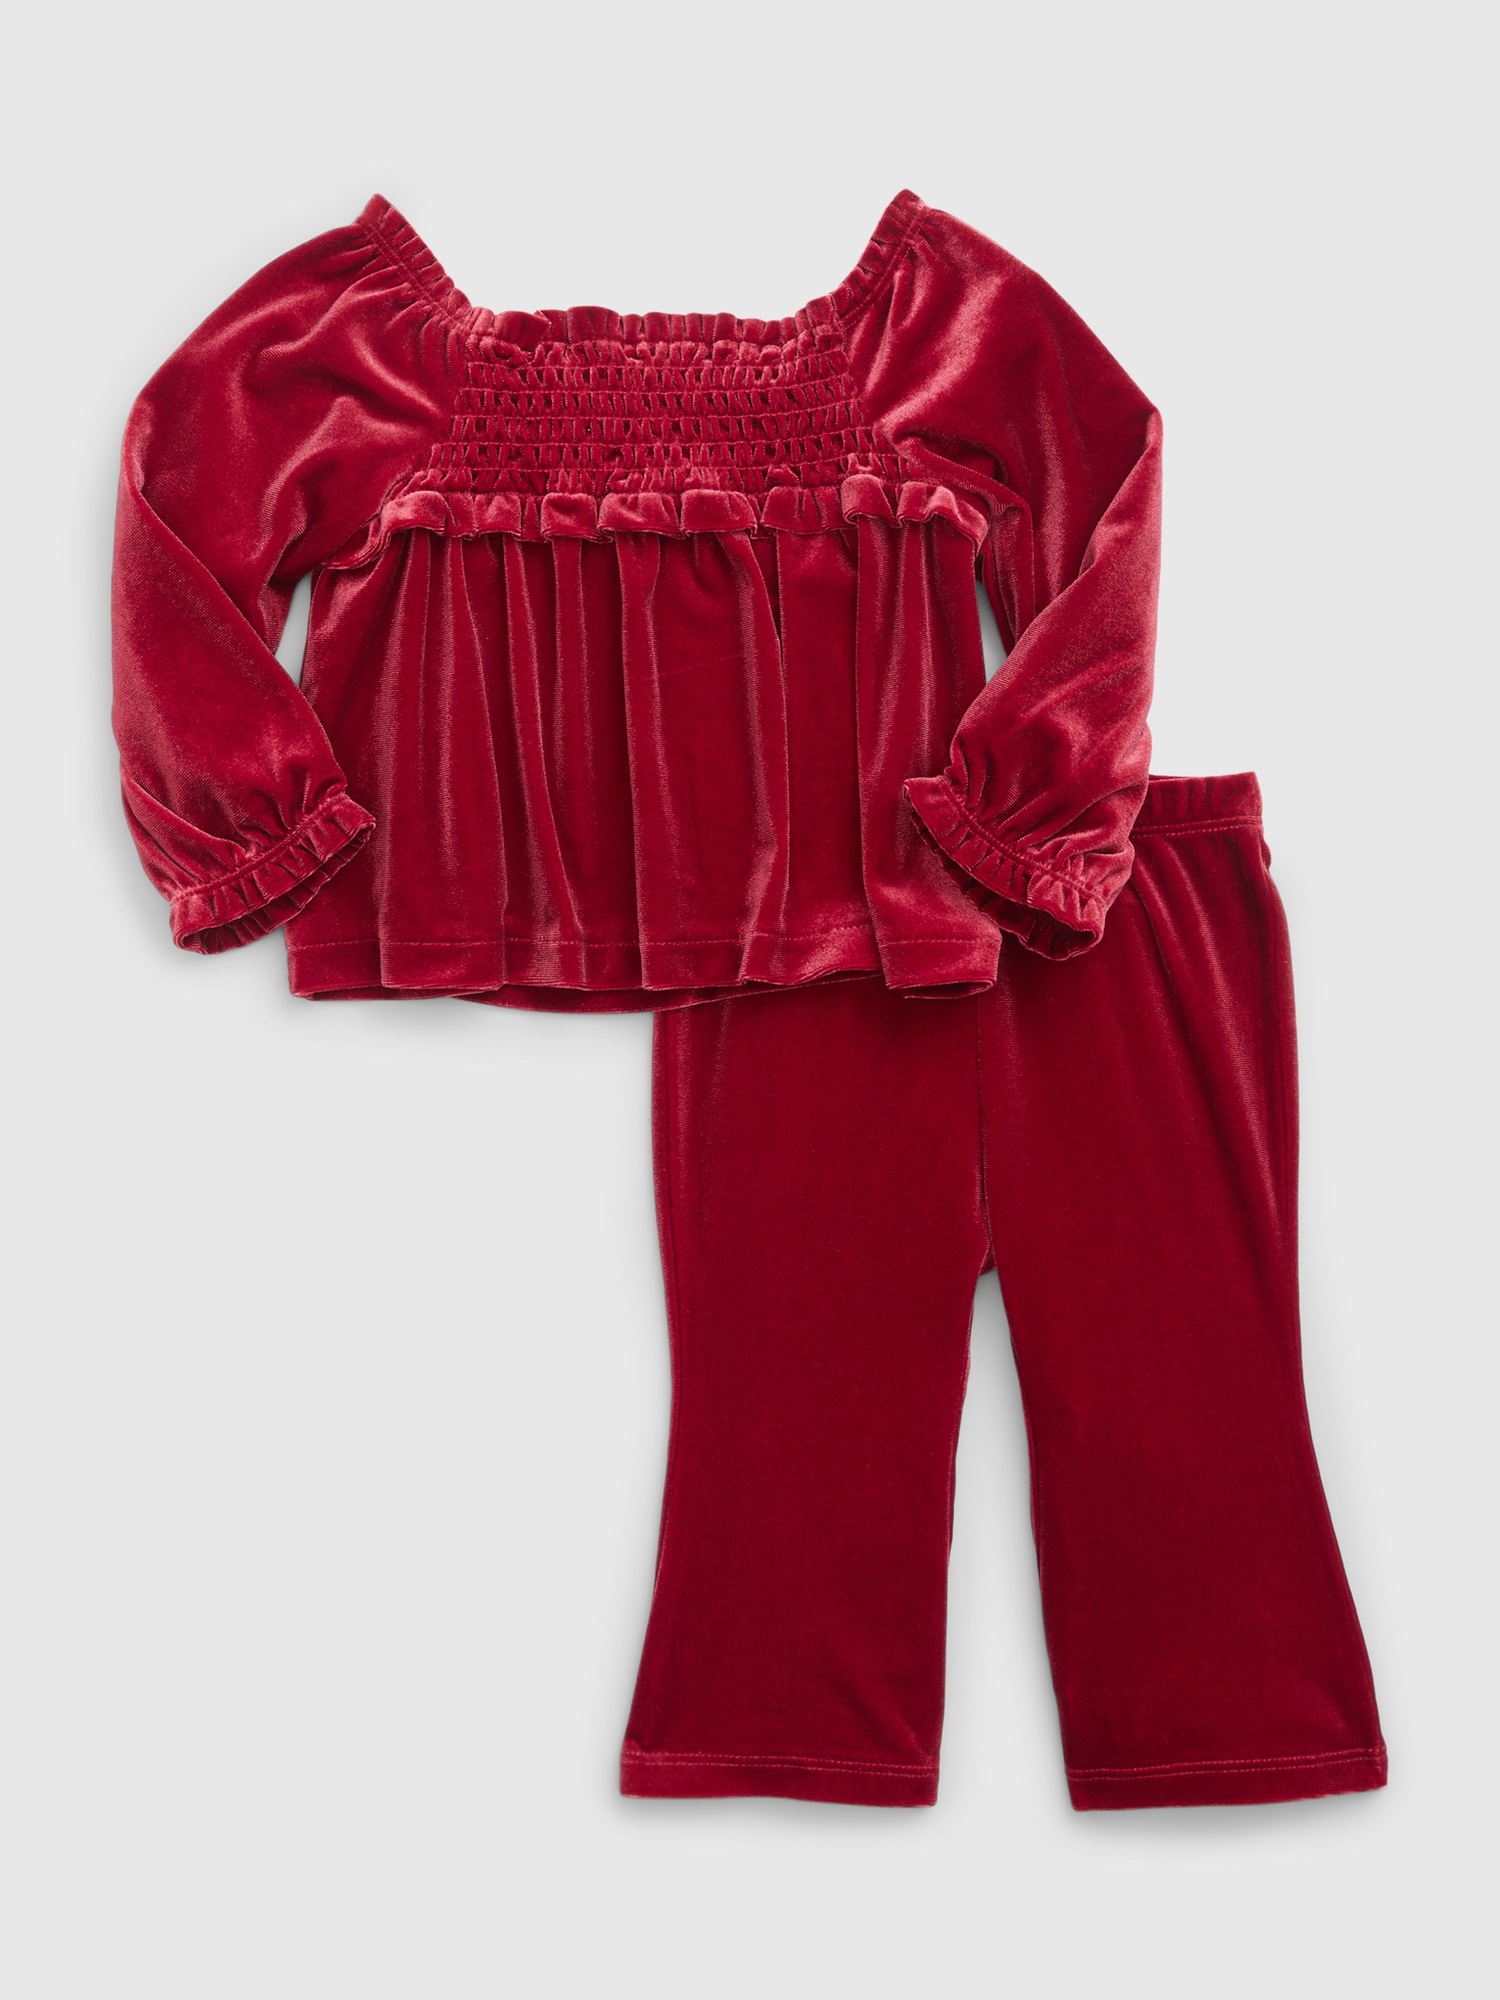 Baby Velvet Smocked Outfit Set